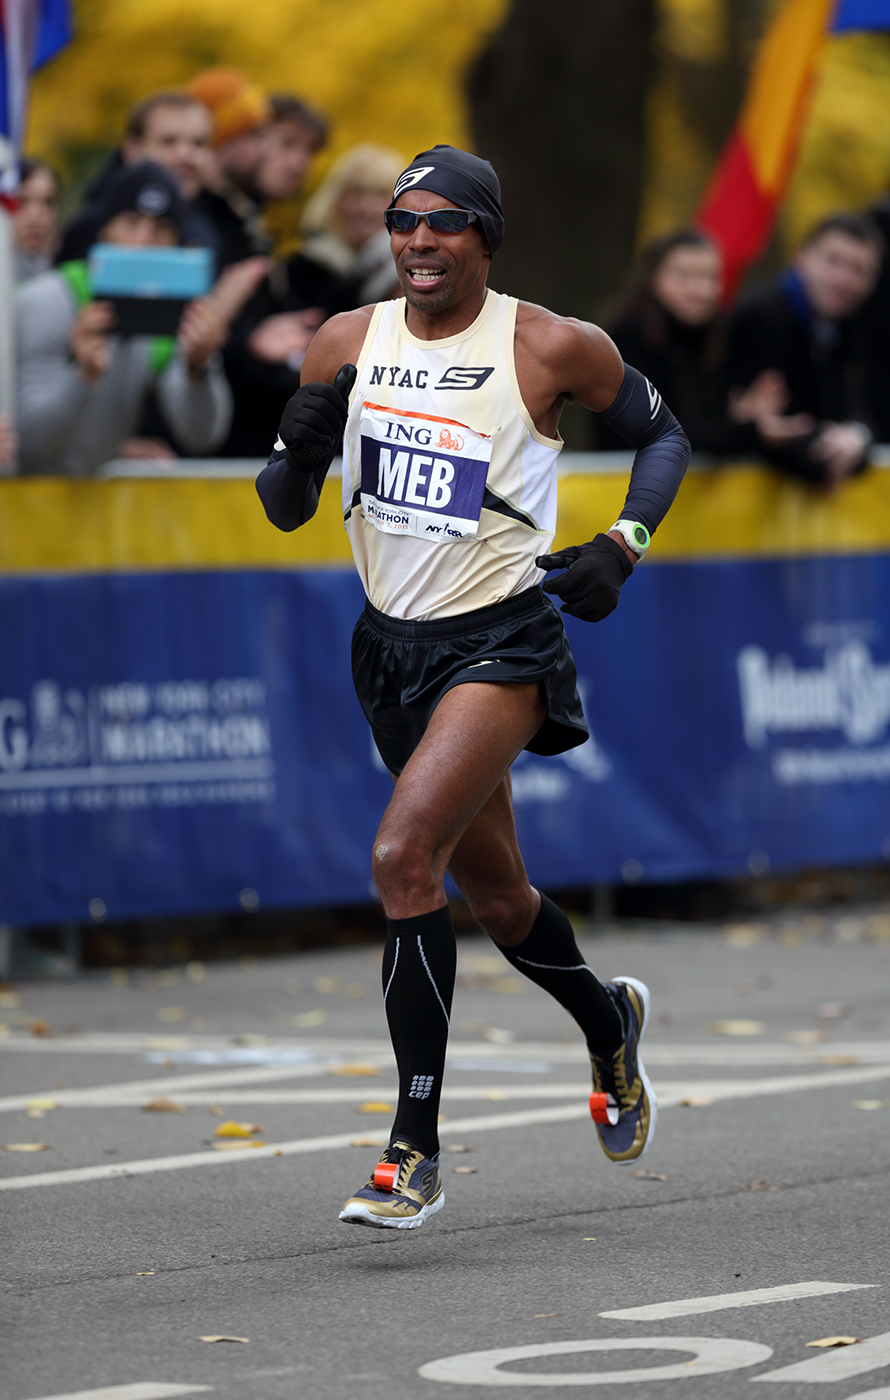 Lessons From Meb Keflezighi's Boston Marathon Win Run, Karla, Run!